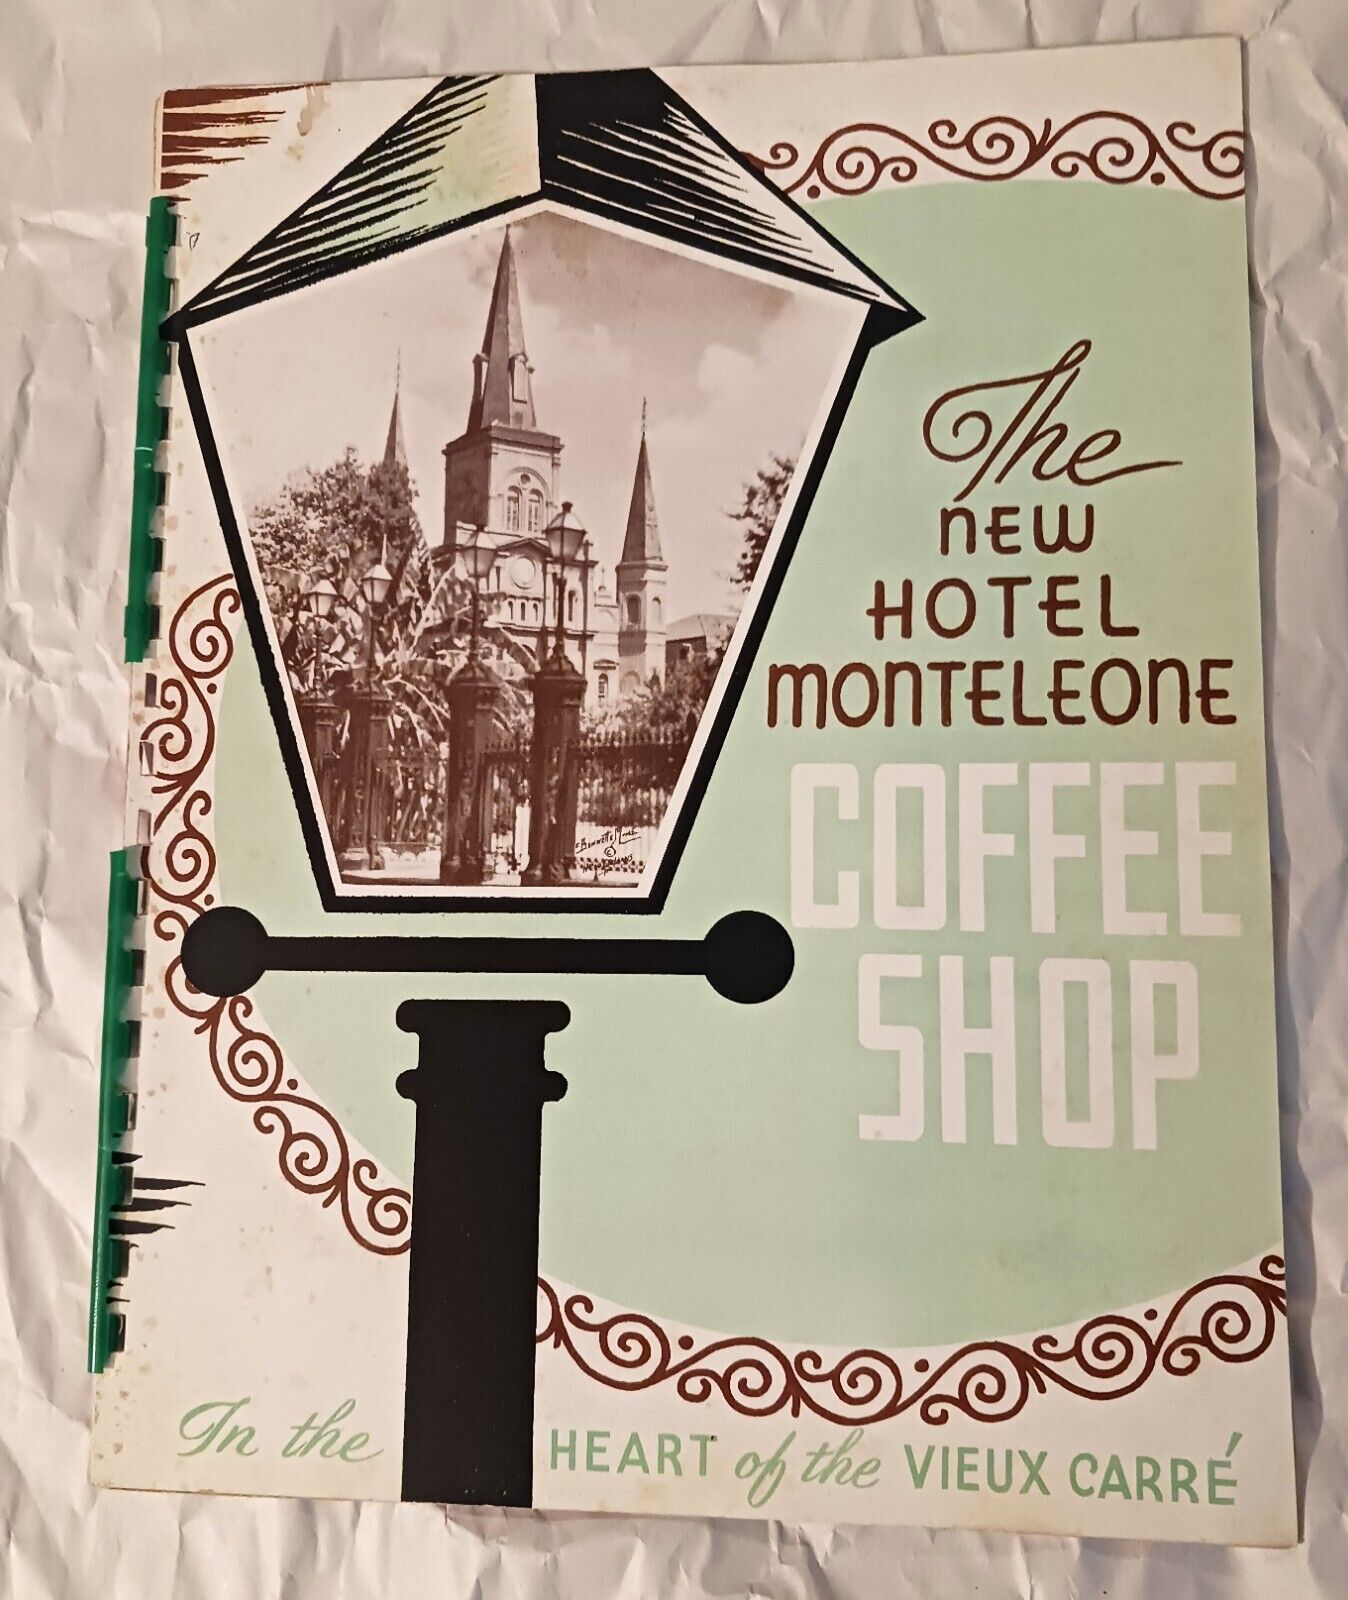 Hotel Monteleone June 1956 Coffee Shop Vintage Menu 10 Pages Spiral Bound